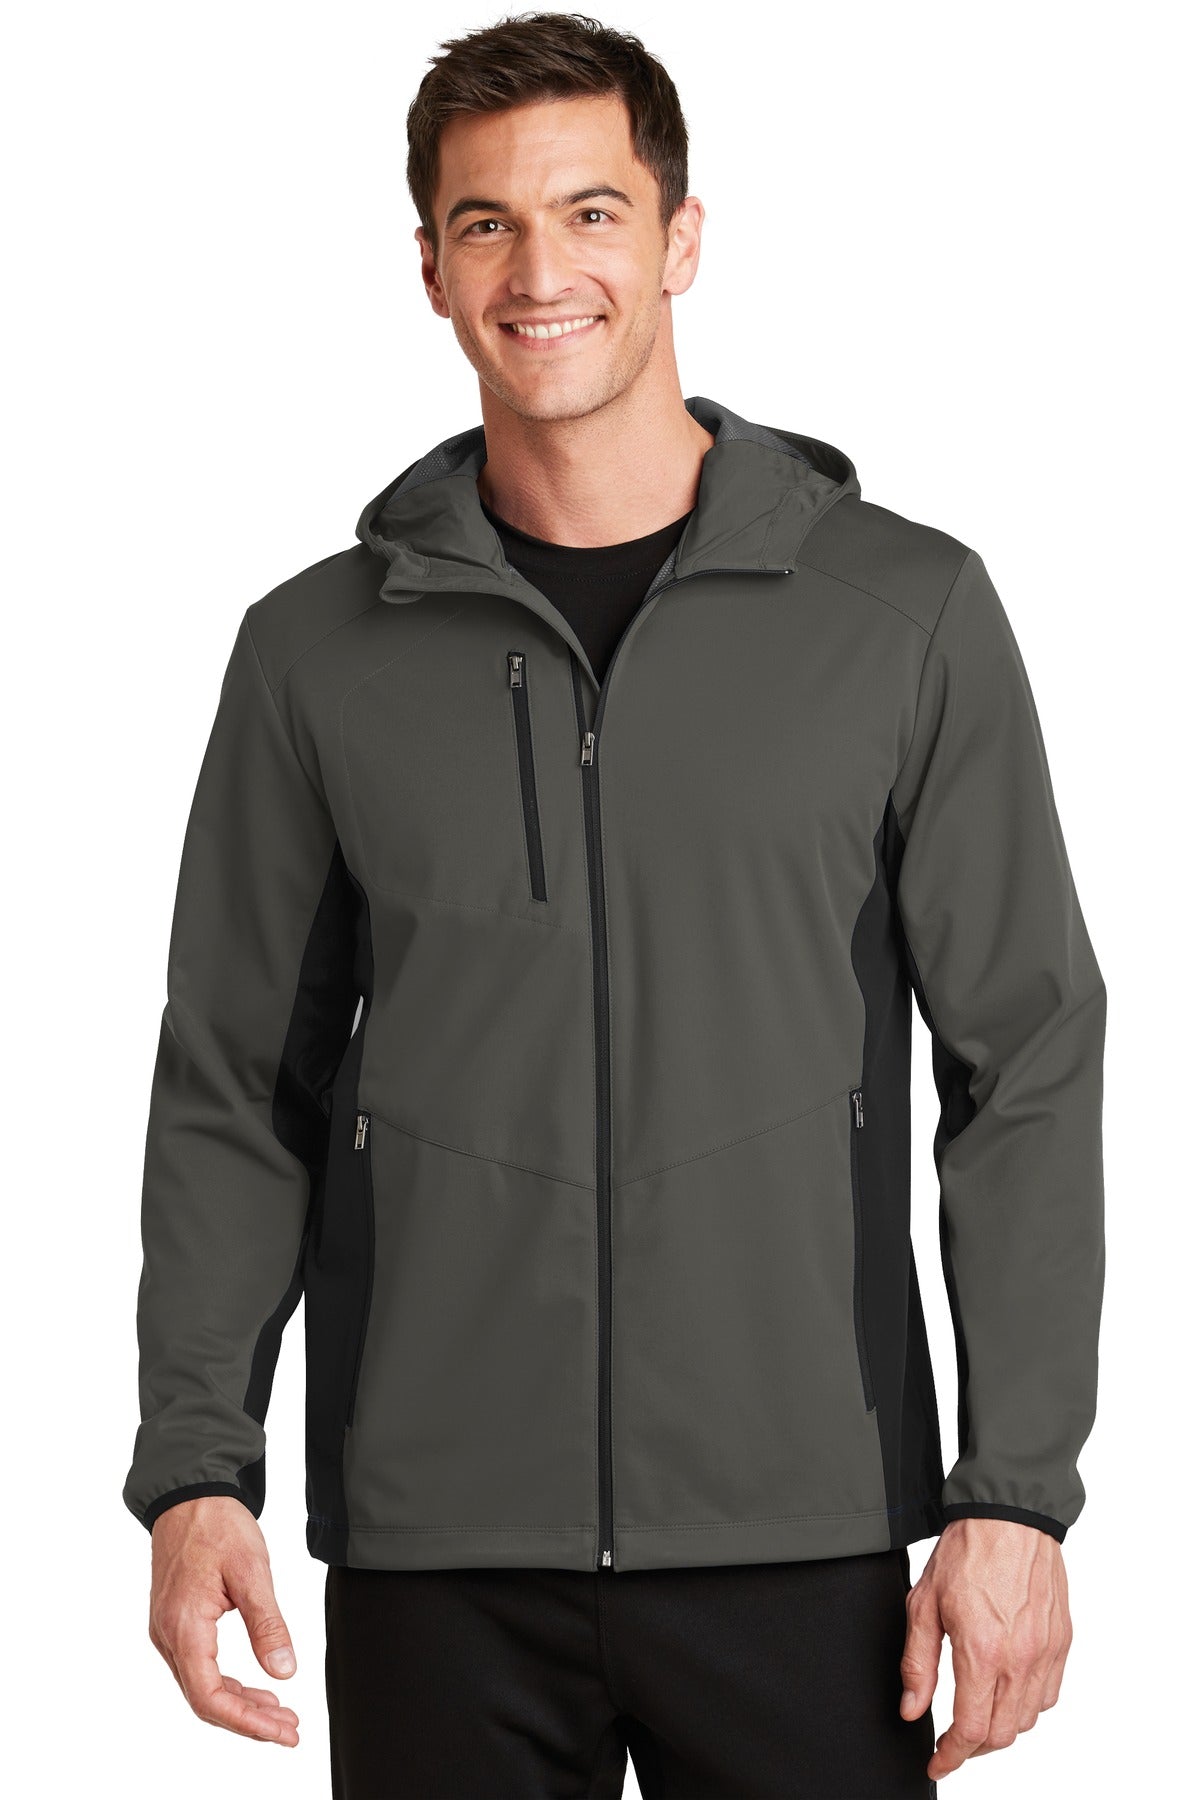 Port Authority® Active Hooded Soft Shell Jacket. J719 - DFW Impression